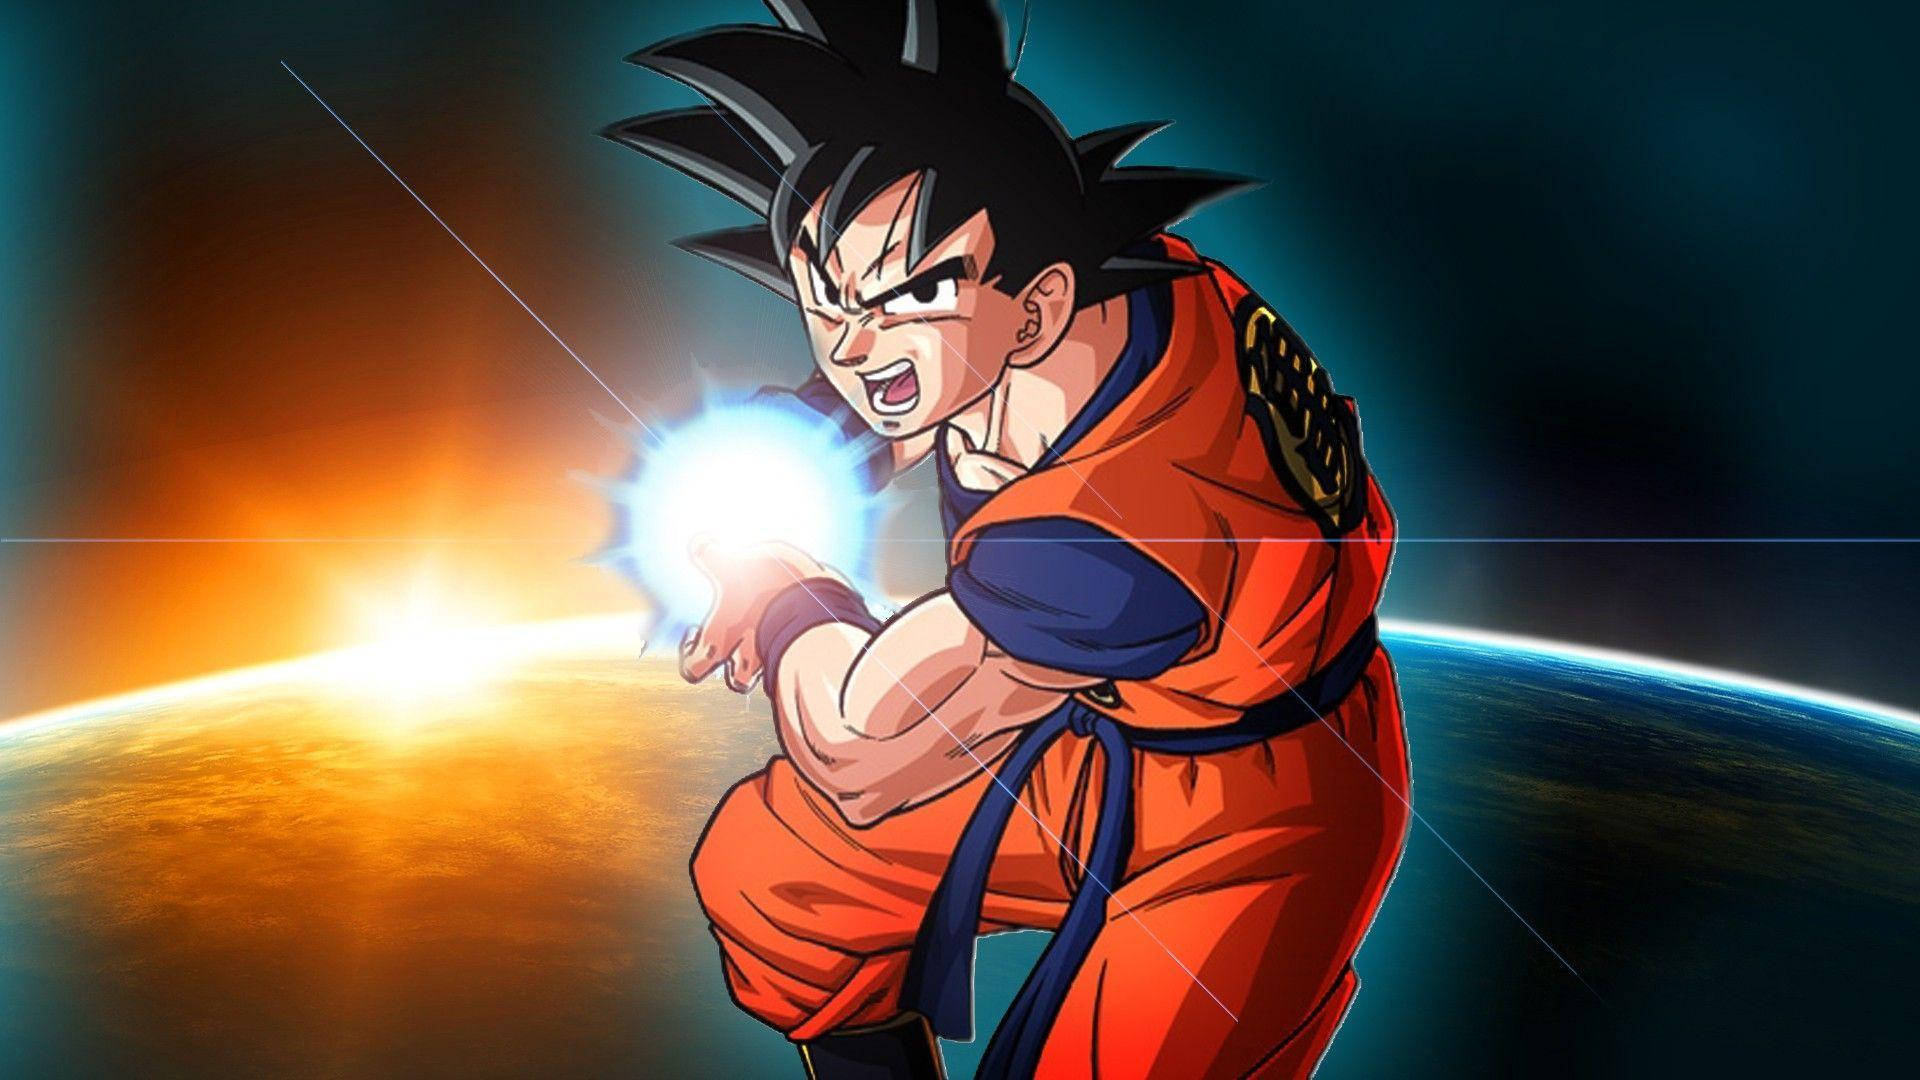 Goku harnesses the power of Super Saiyan Blue in 'Dragon Ball Super' Wallpaper